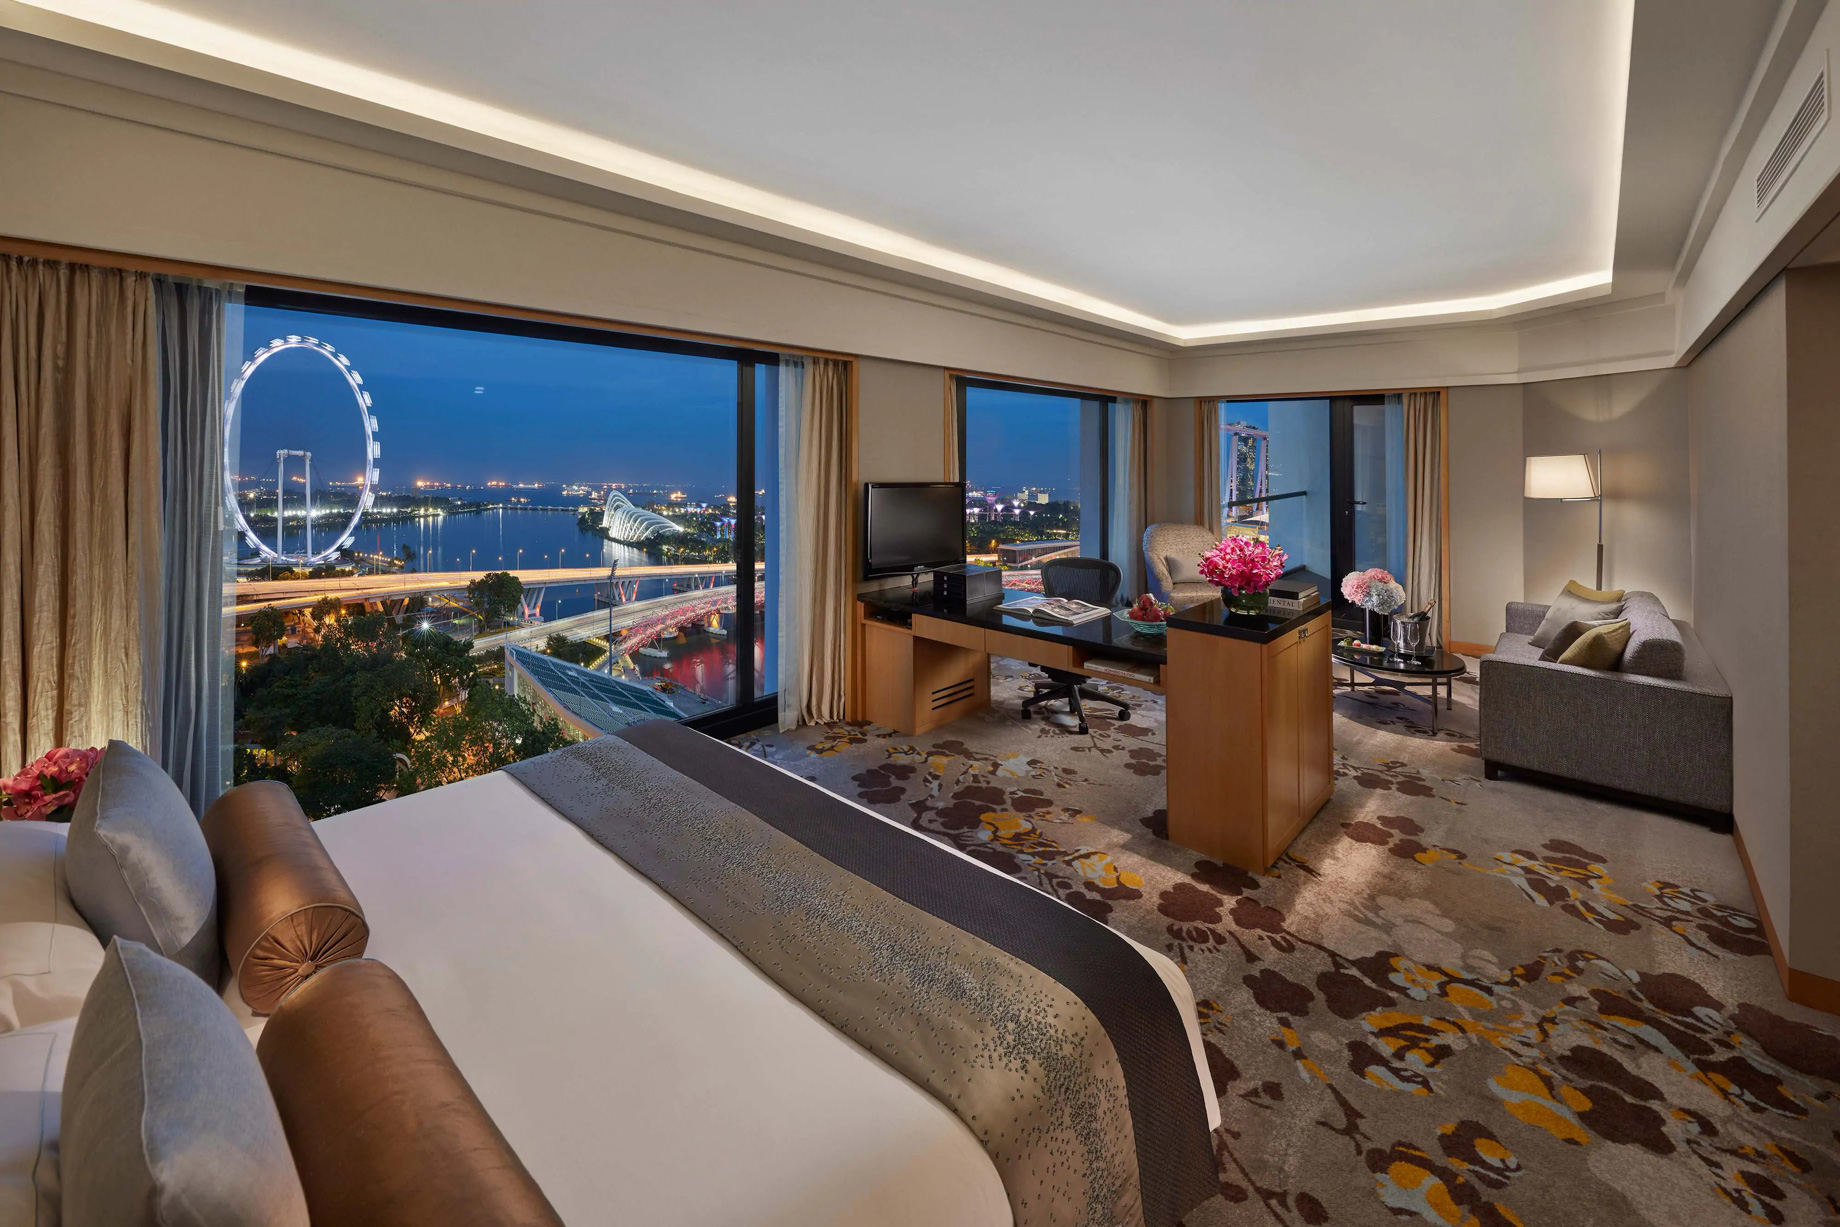 Mandarin Oriental, Singapore Hotel – Singapore – Ocean Grand Room